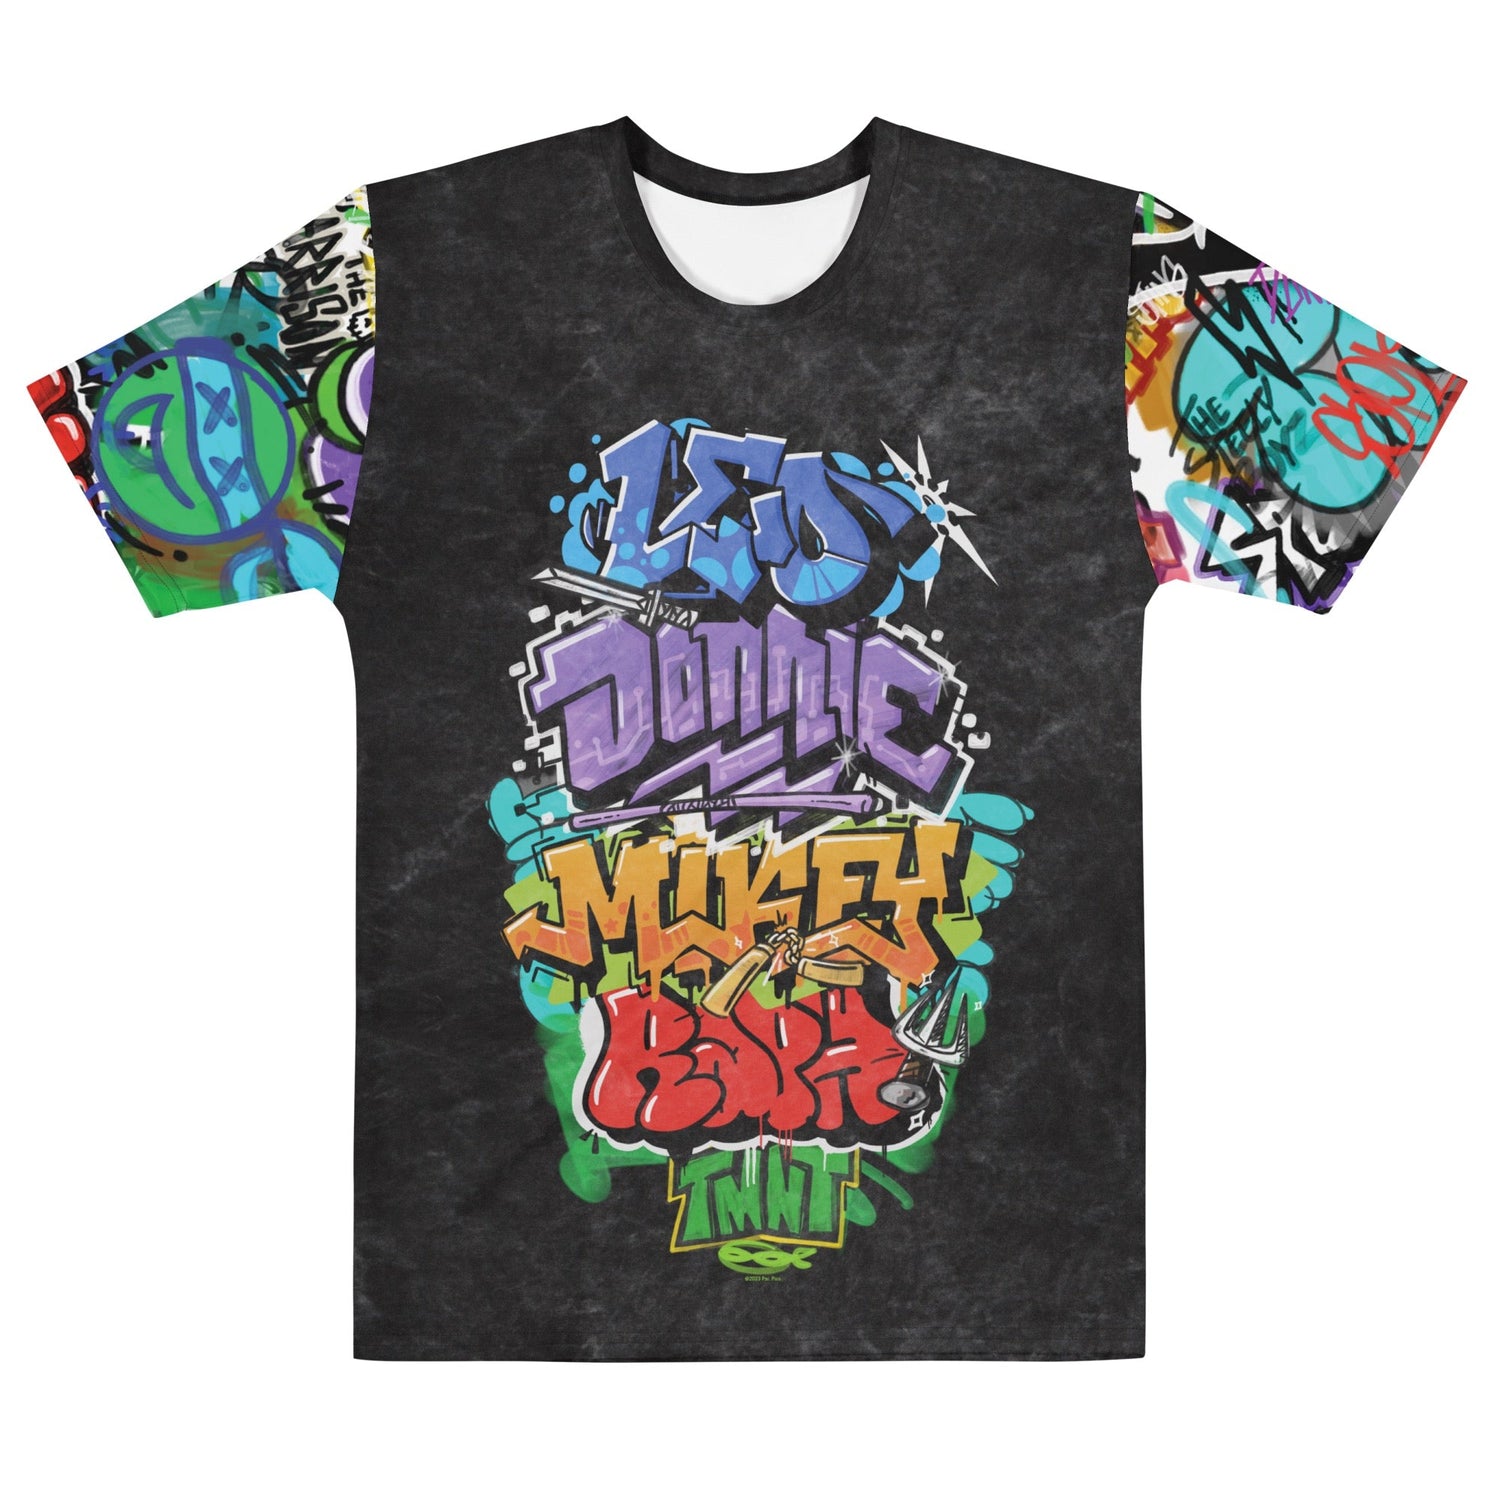 Teenage Mutant Ninja Turtles: Mutant Mayhem Graffiti T - Shirt - Paramount Shop